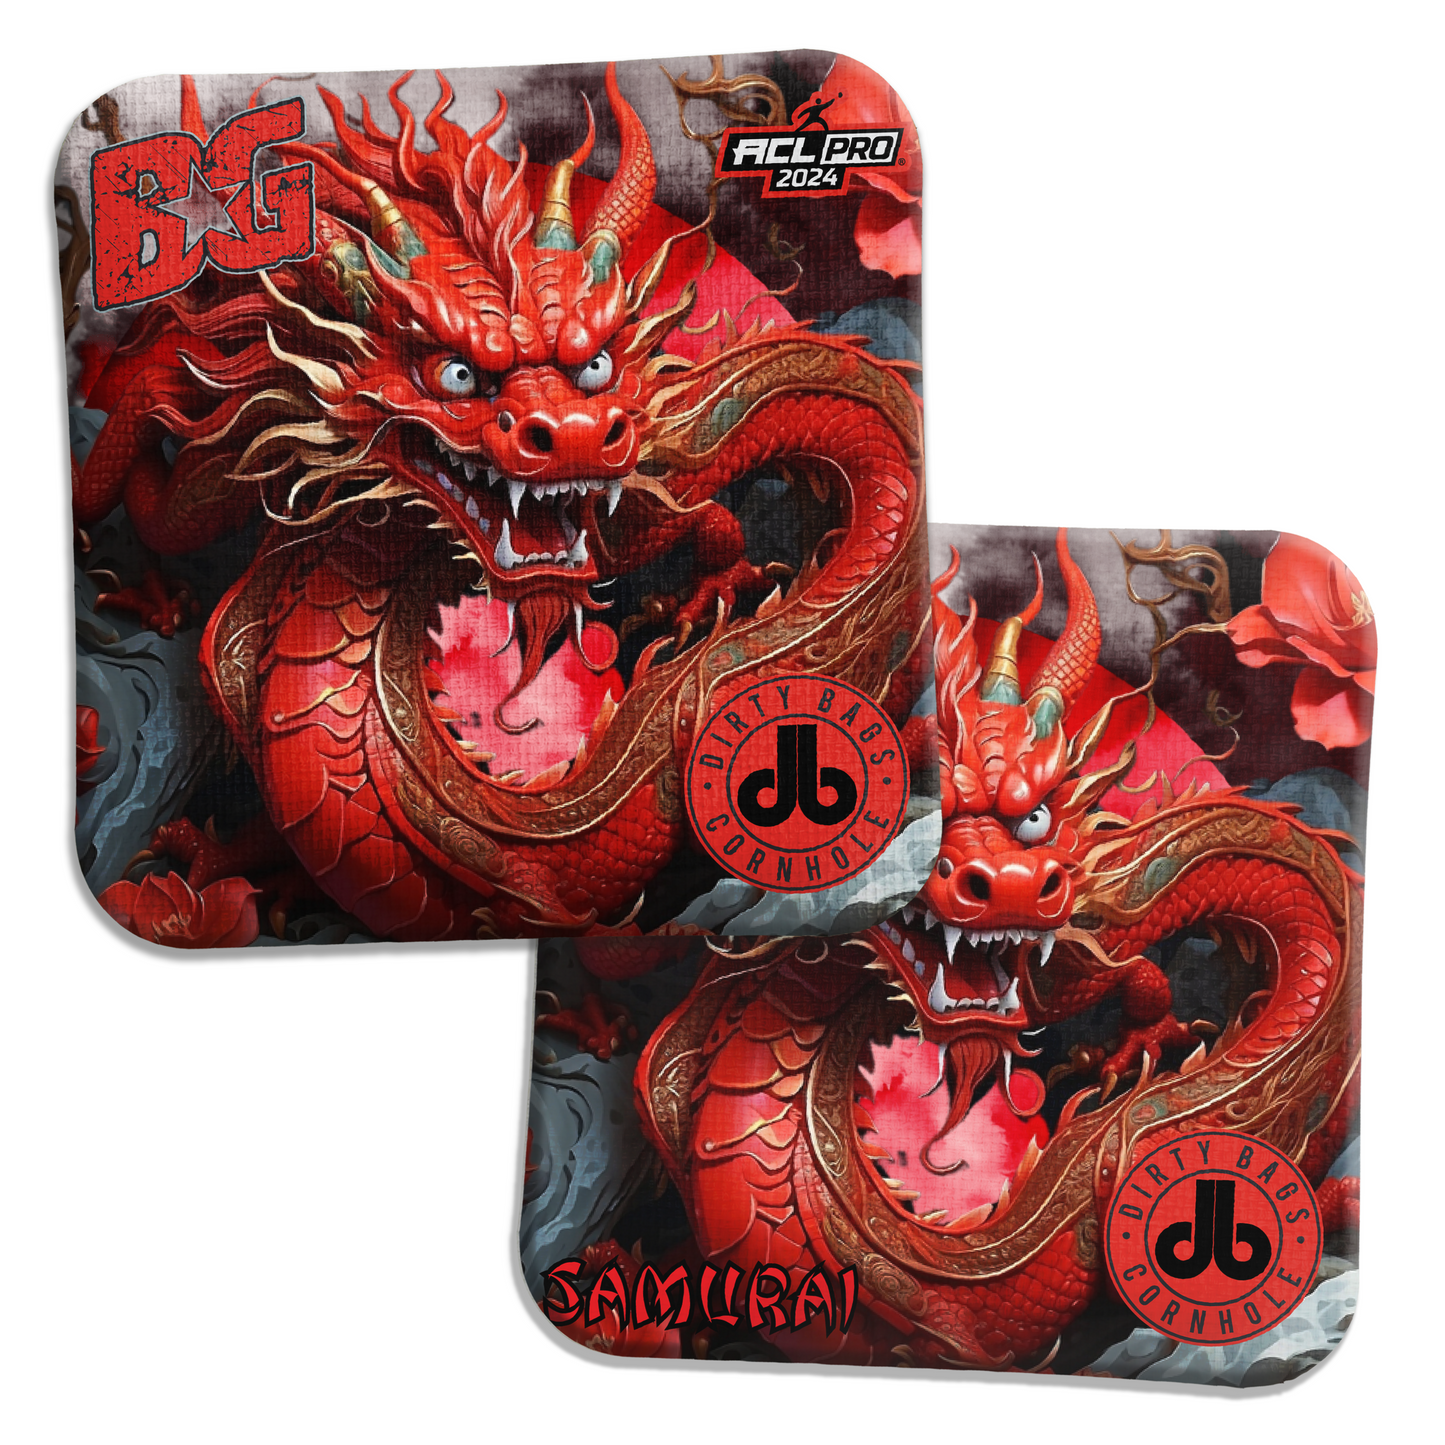 BG Cornhole Samurai - Red Dragon